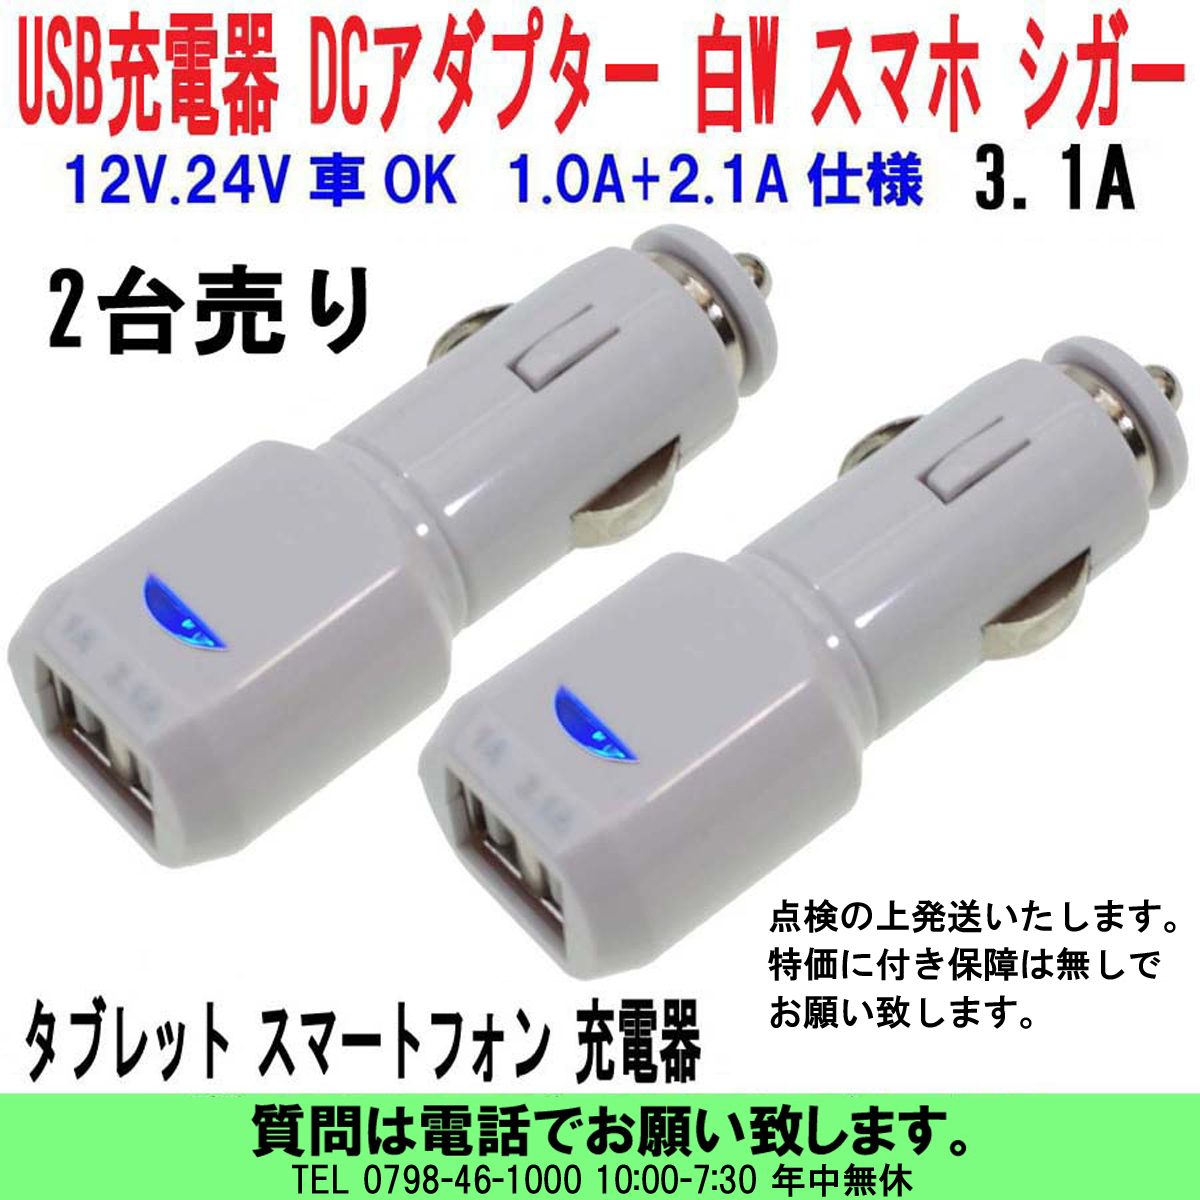 [uas]携帯電話 USB充電器 W白 2台売 スマホ タブレット 12V 24V兼用 シガーソケット DCアダプター 2ポート DC5V 3.0A 新品 新品 送料300円